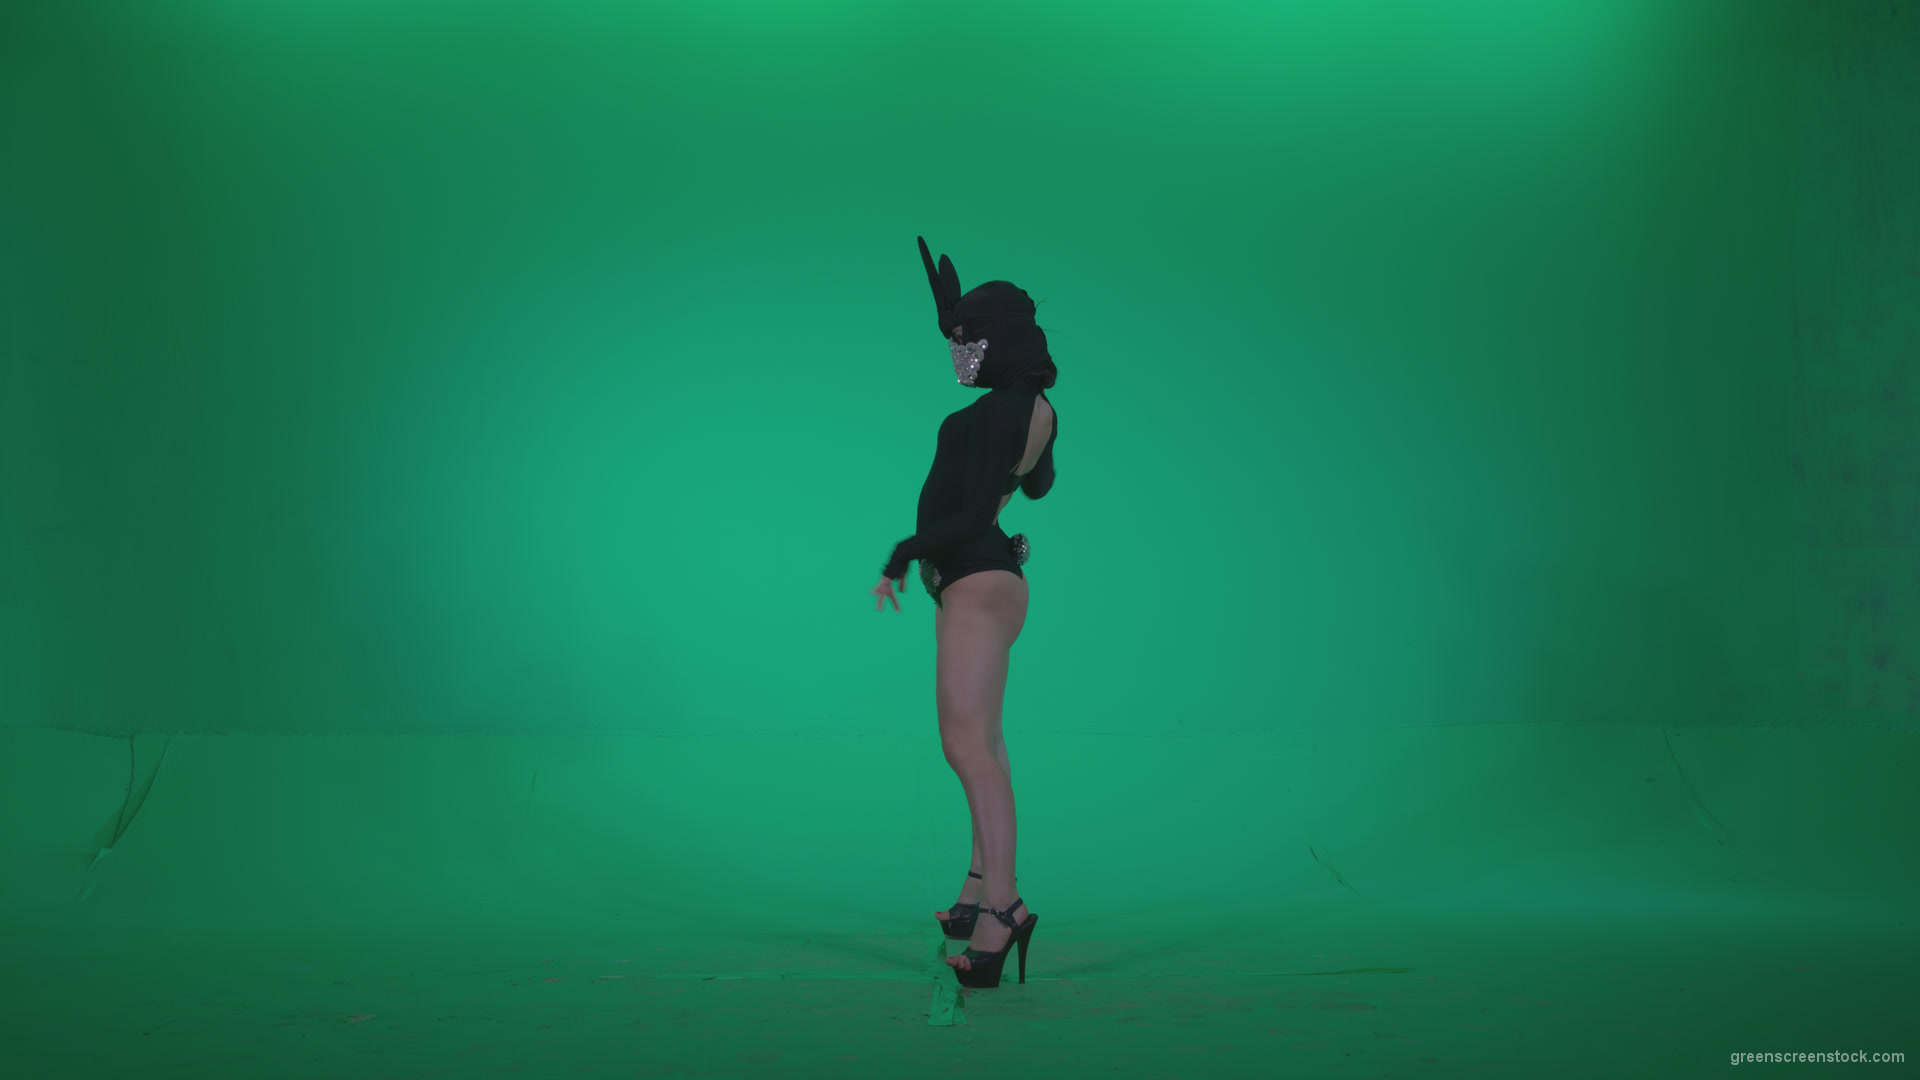 Go-go-Dancer-Black-Rabbit-u8-Green-Screen-Video-Footage_008 Green Screen Stock